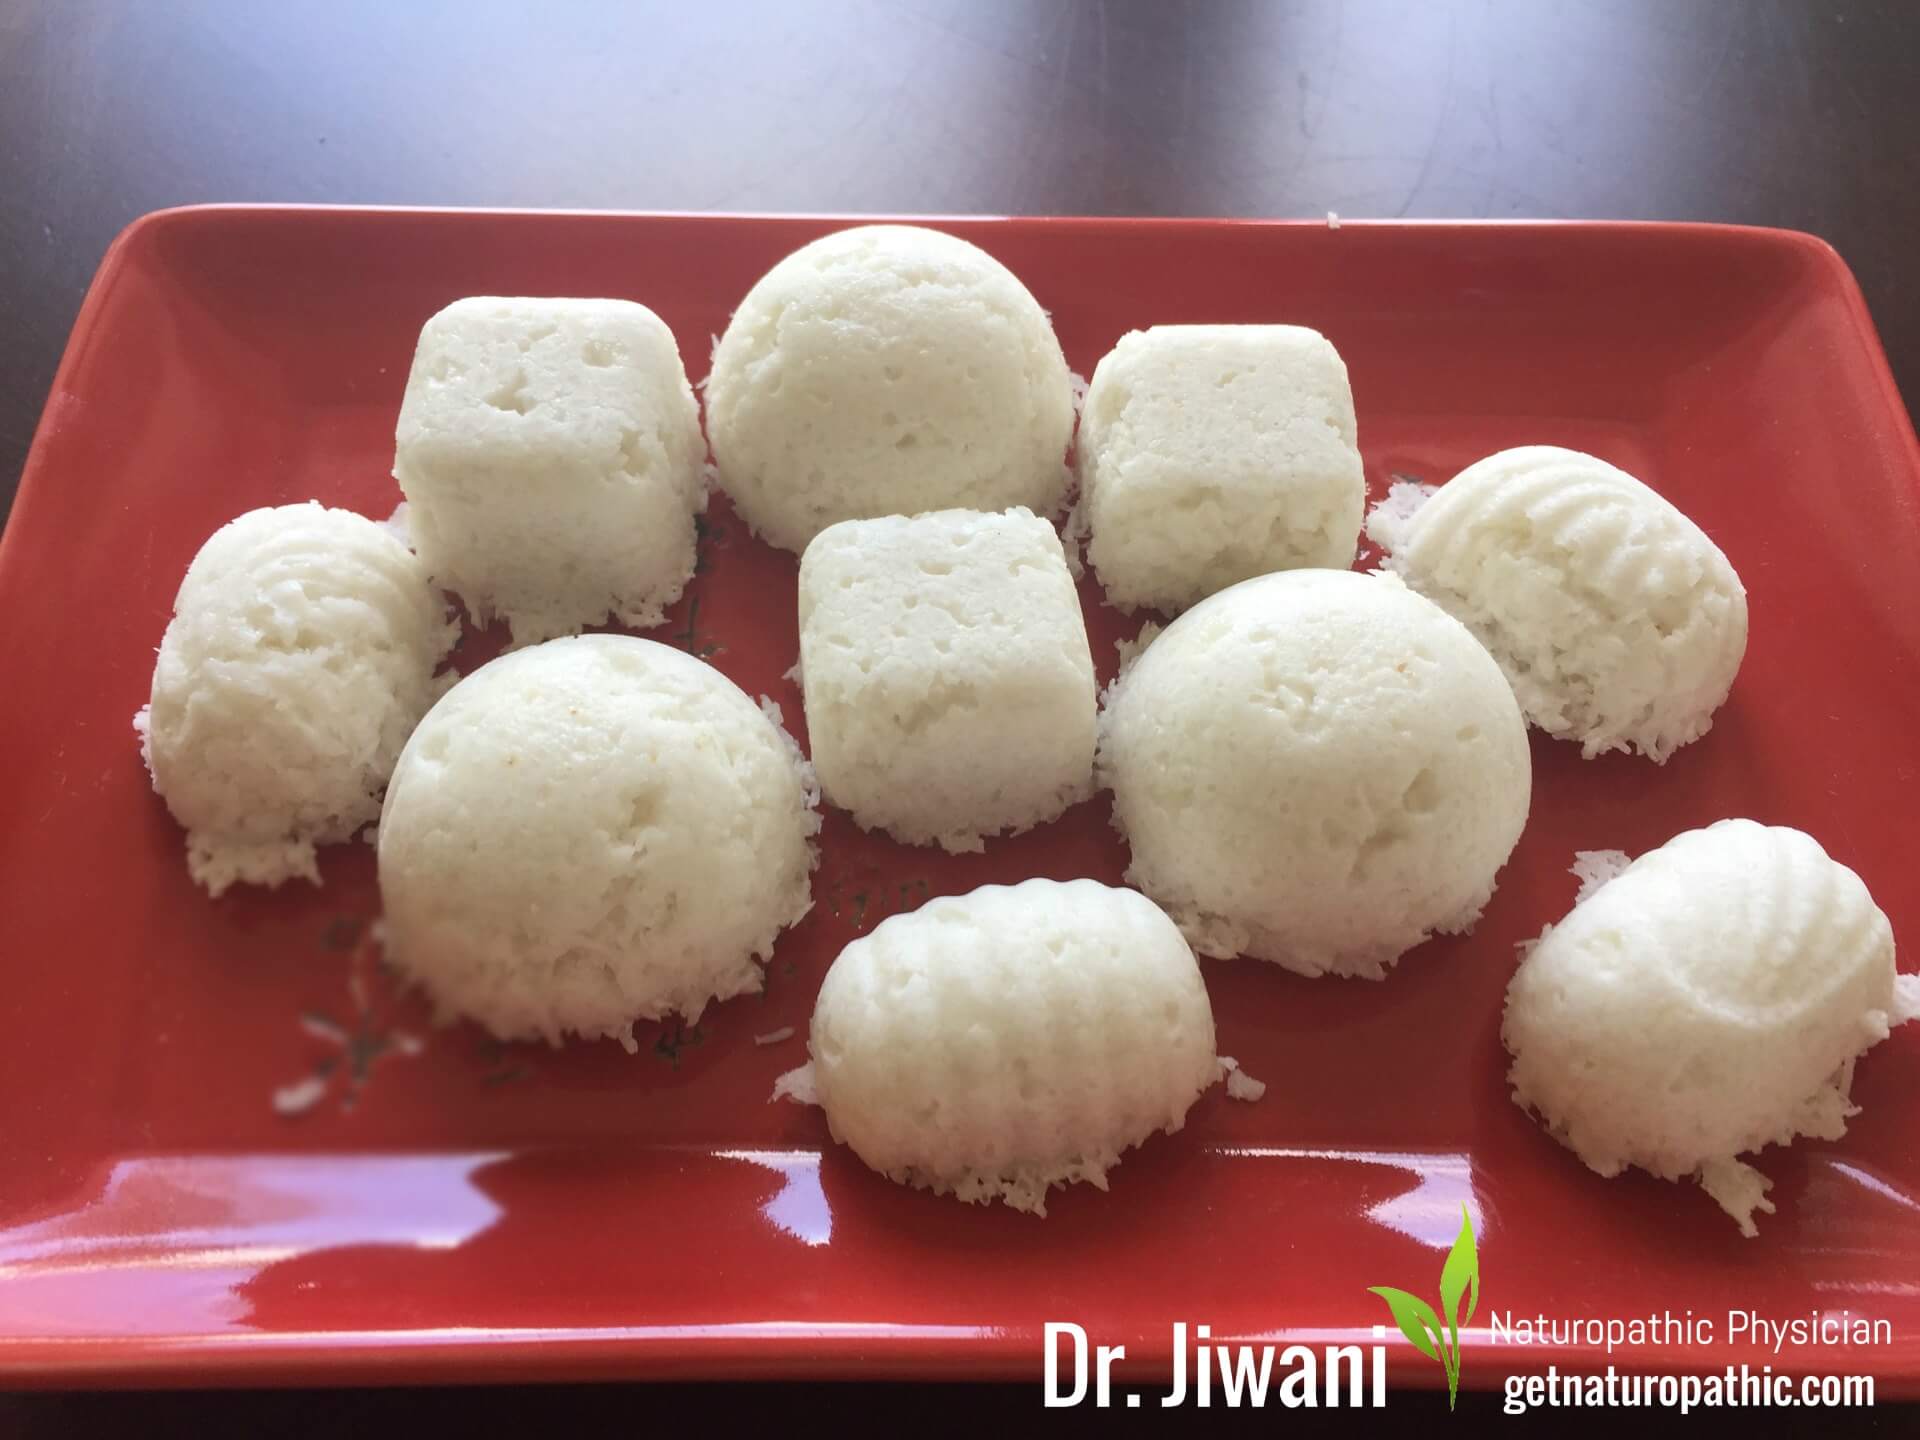 Dr. Jiwani’s Coconut Candy Bites Paleo Keto Low Carb Delights | Dr. Jiwani's Naturopathic Nuggets Blog